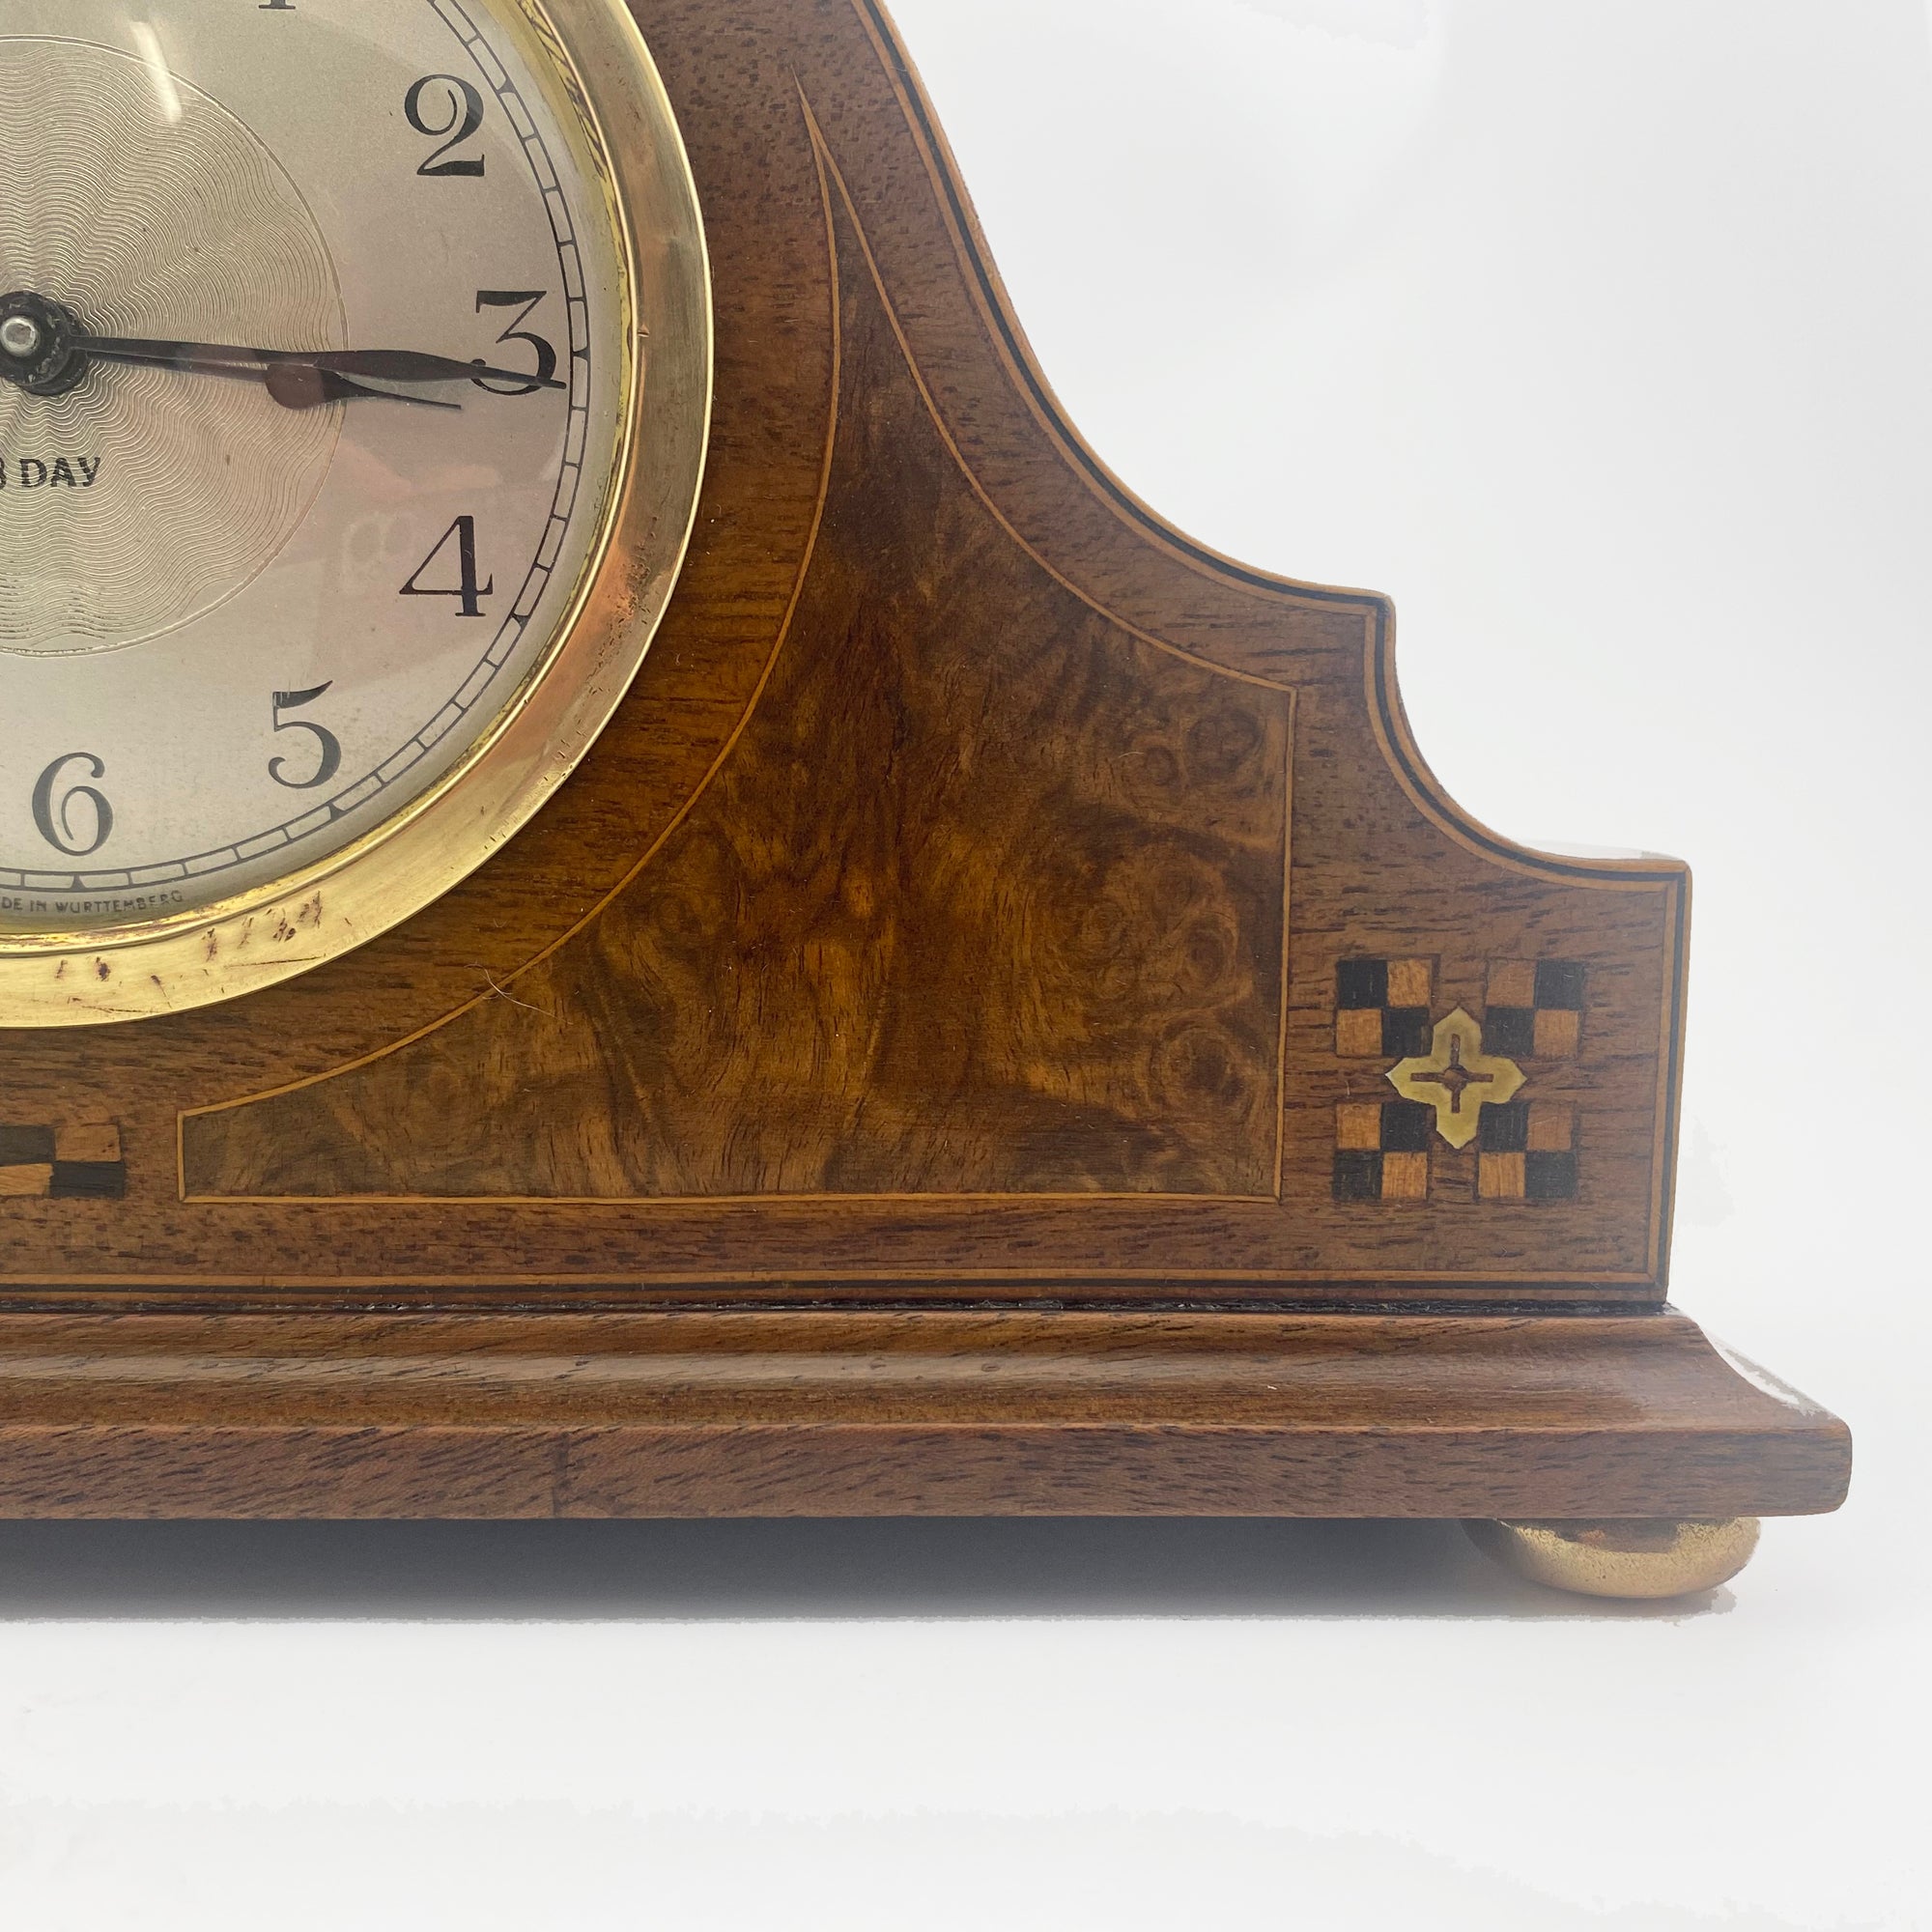 8 Day Inlaid Desk Clock Made in Wurtemmberg